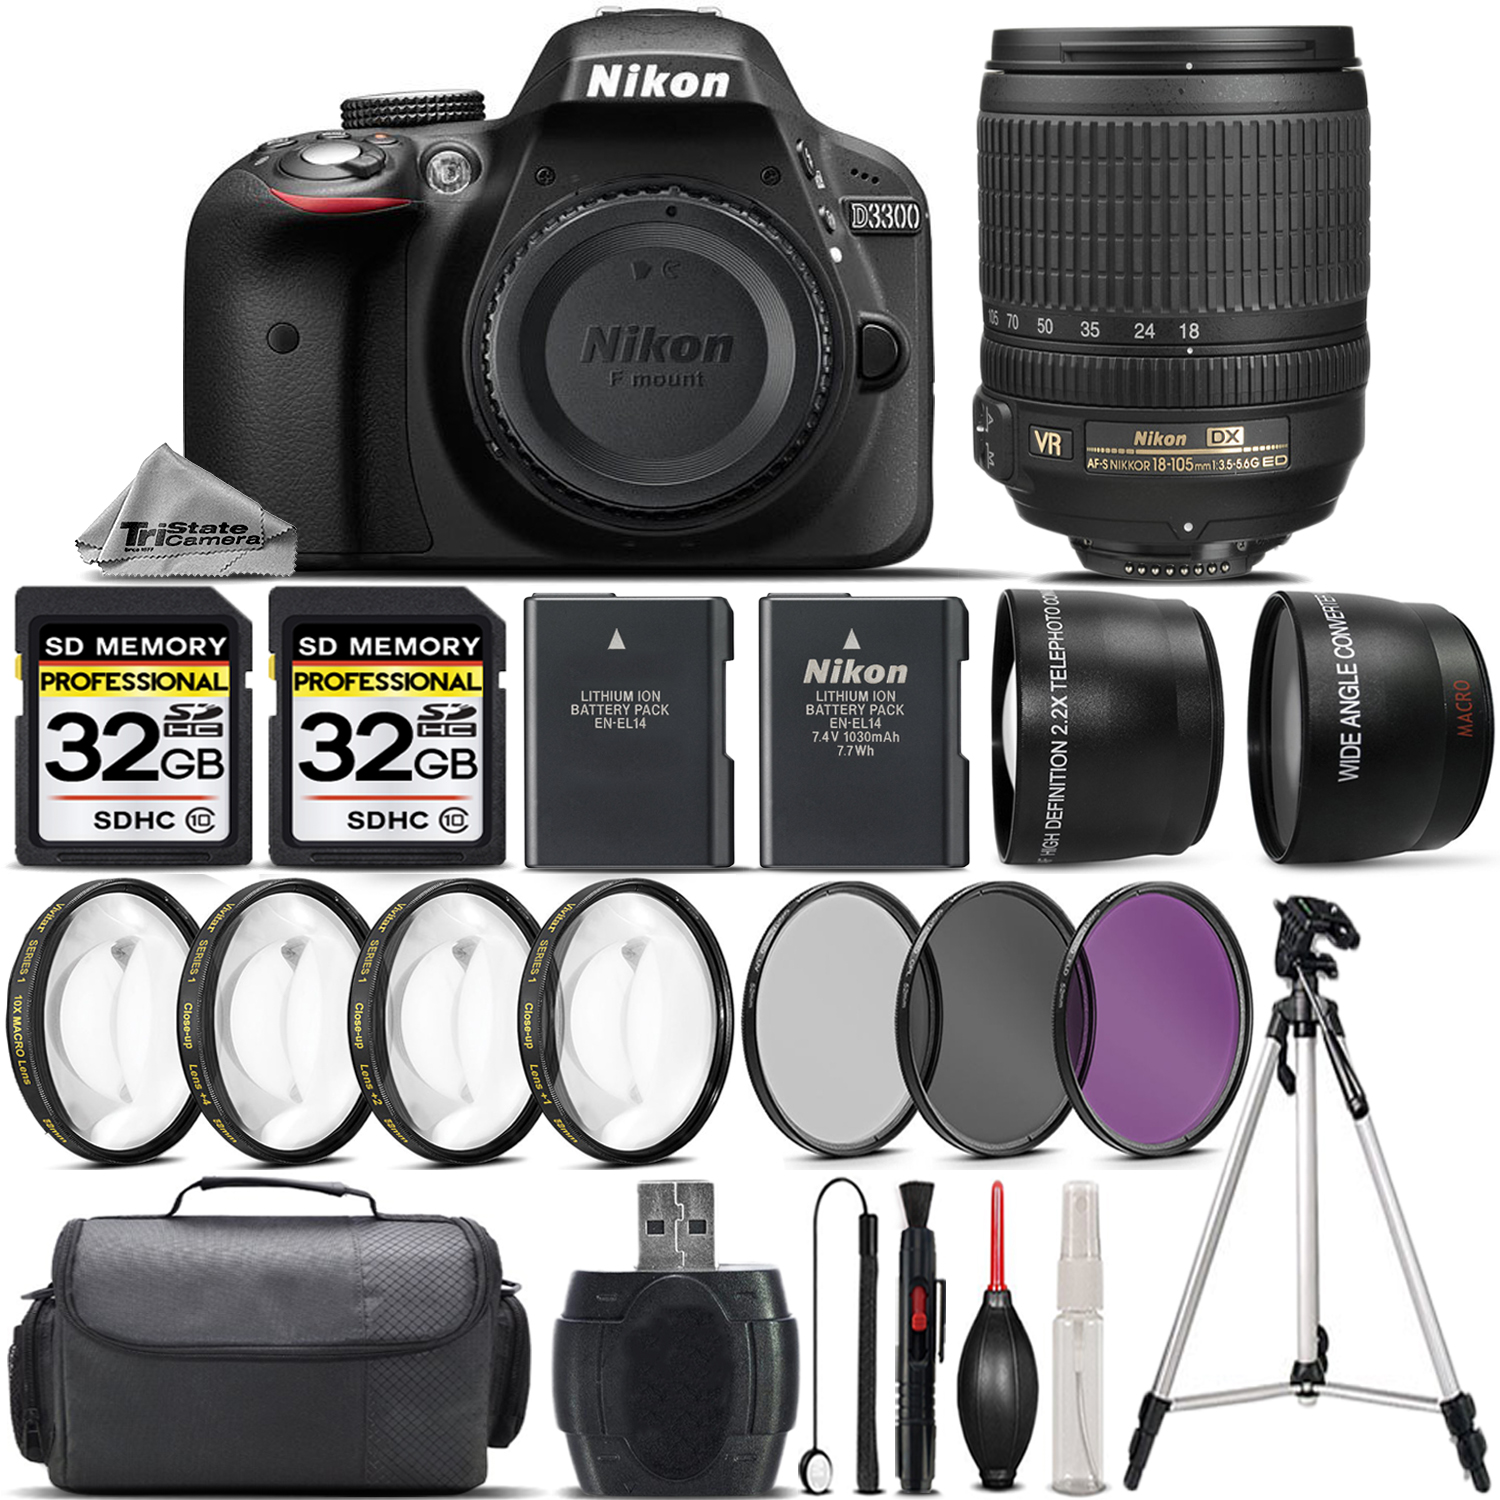 D3300 DSLR Camera with Nikon 18-105 VR Lens + Extra Battery +4PC Macro Kit *FREE SHIPPING*